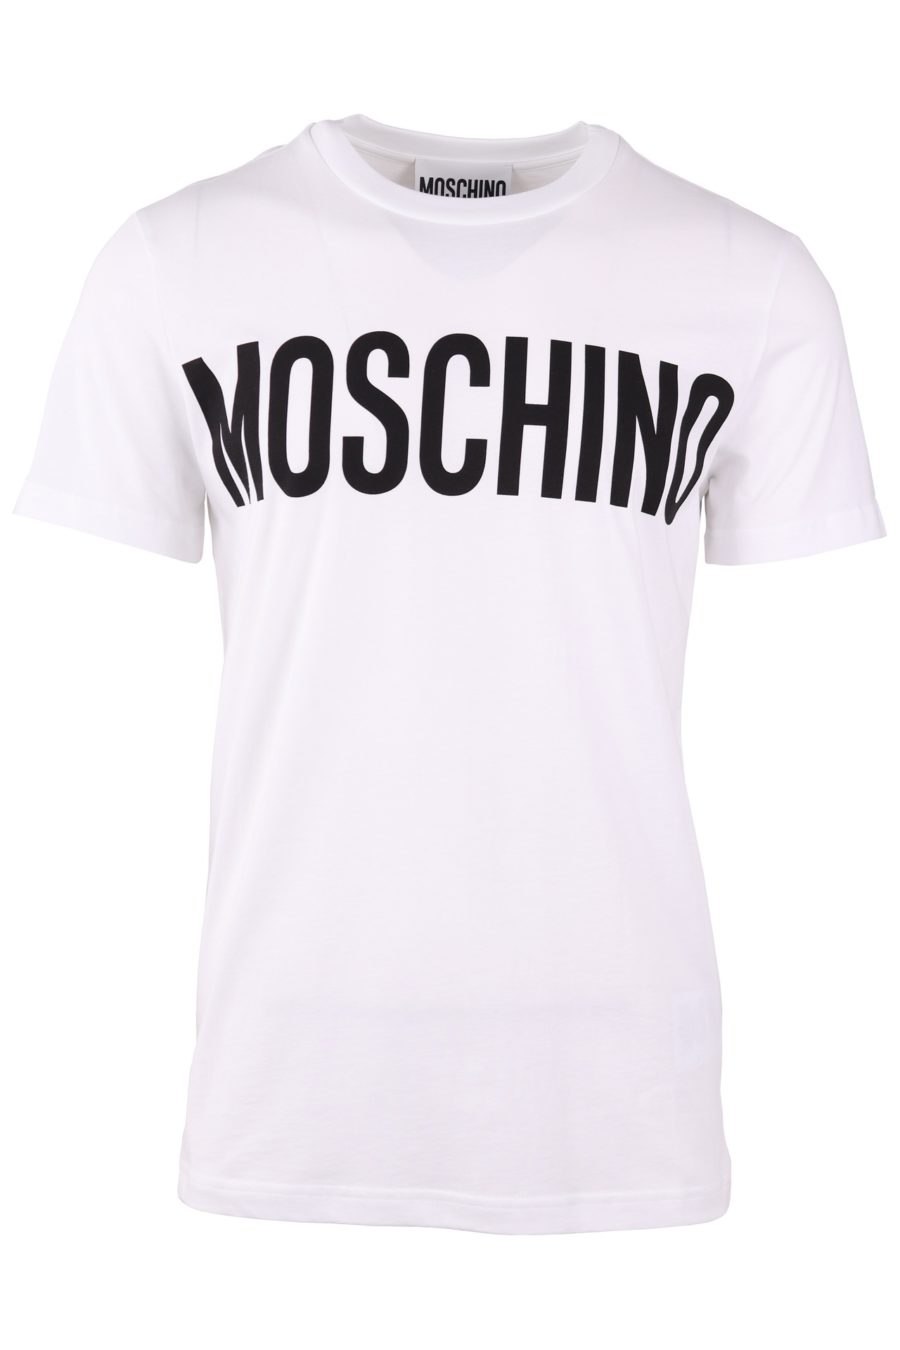 Moschino Couture T-shirt blanc avec logo noir sur le devant - 957deafc0a212be66e2bc0c8fbf9e092f5147864